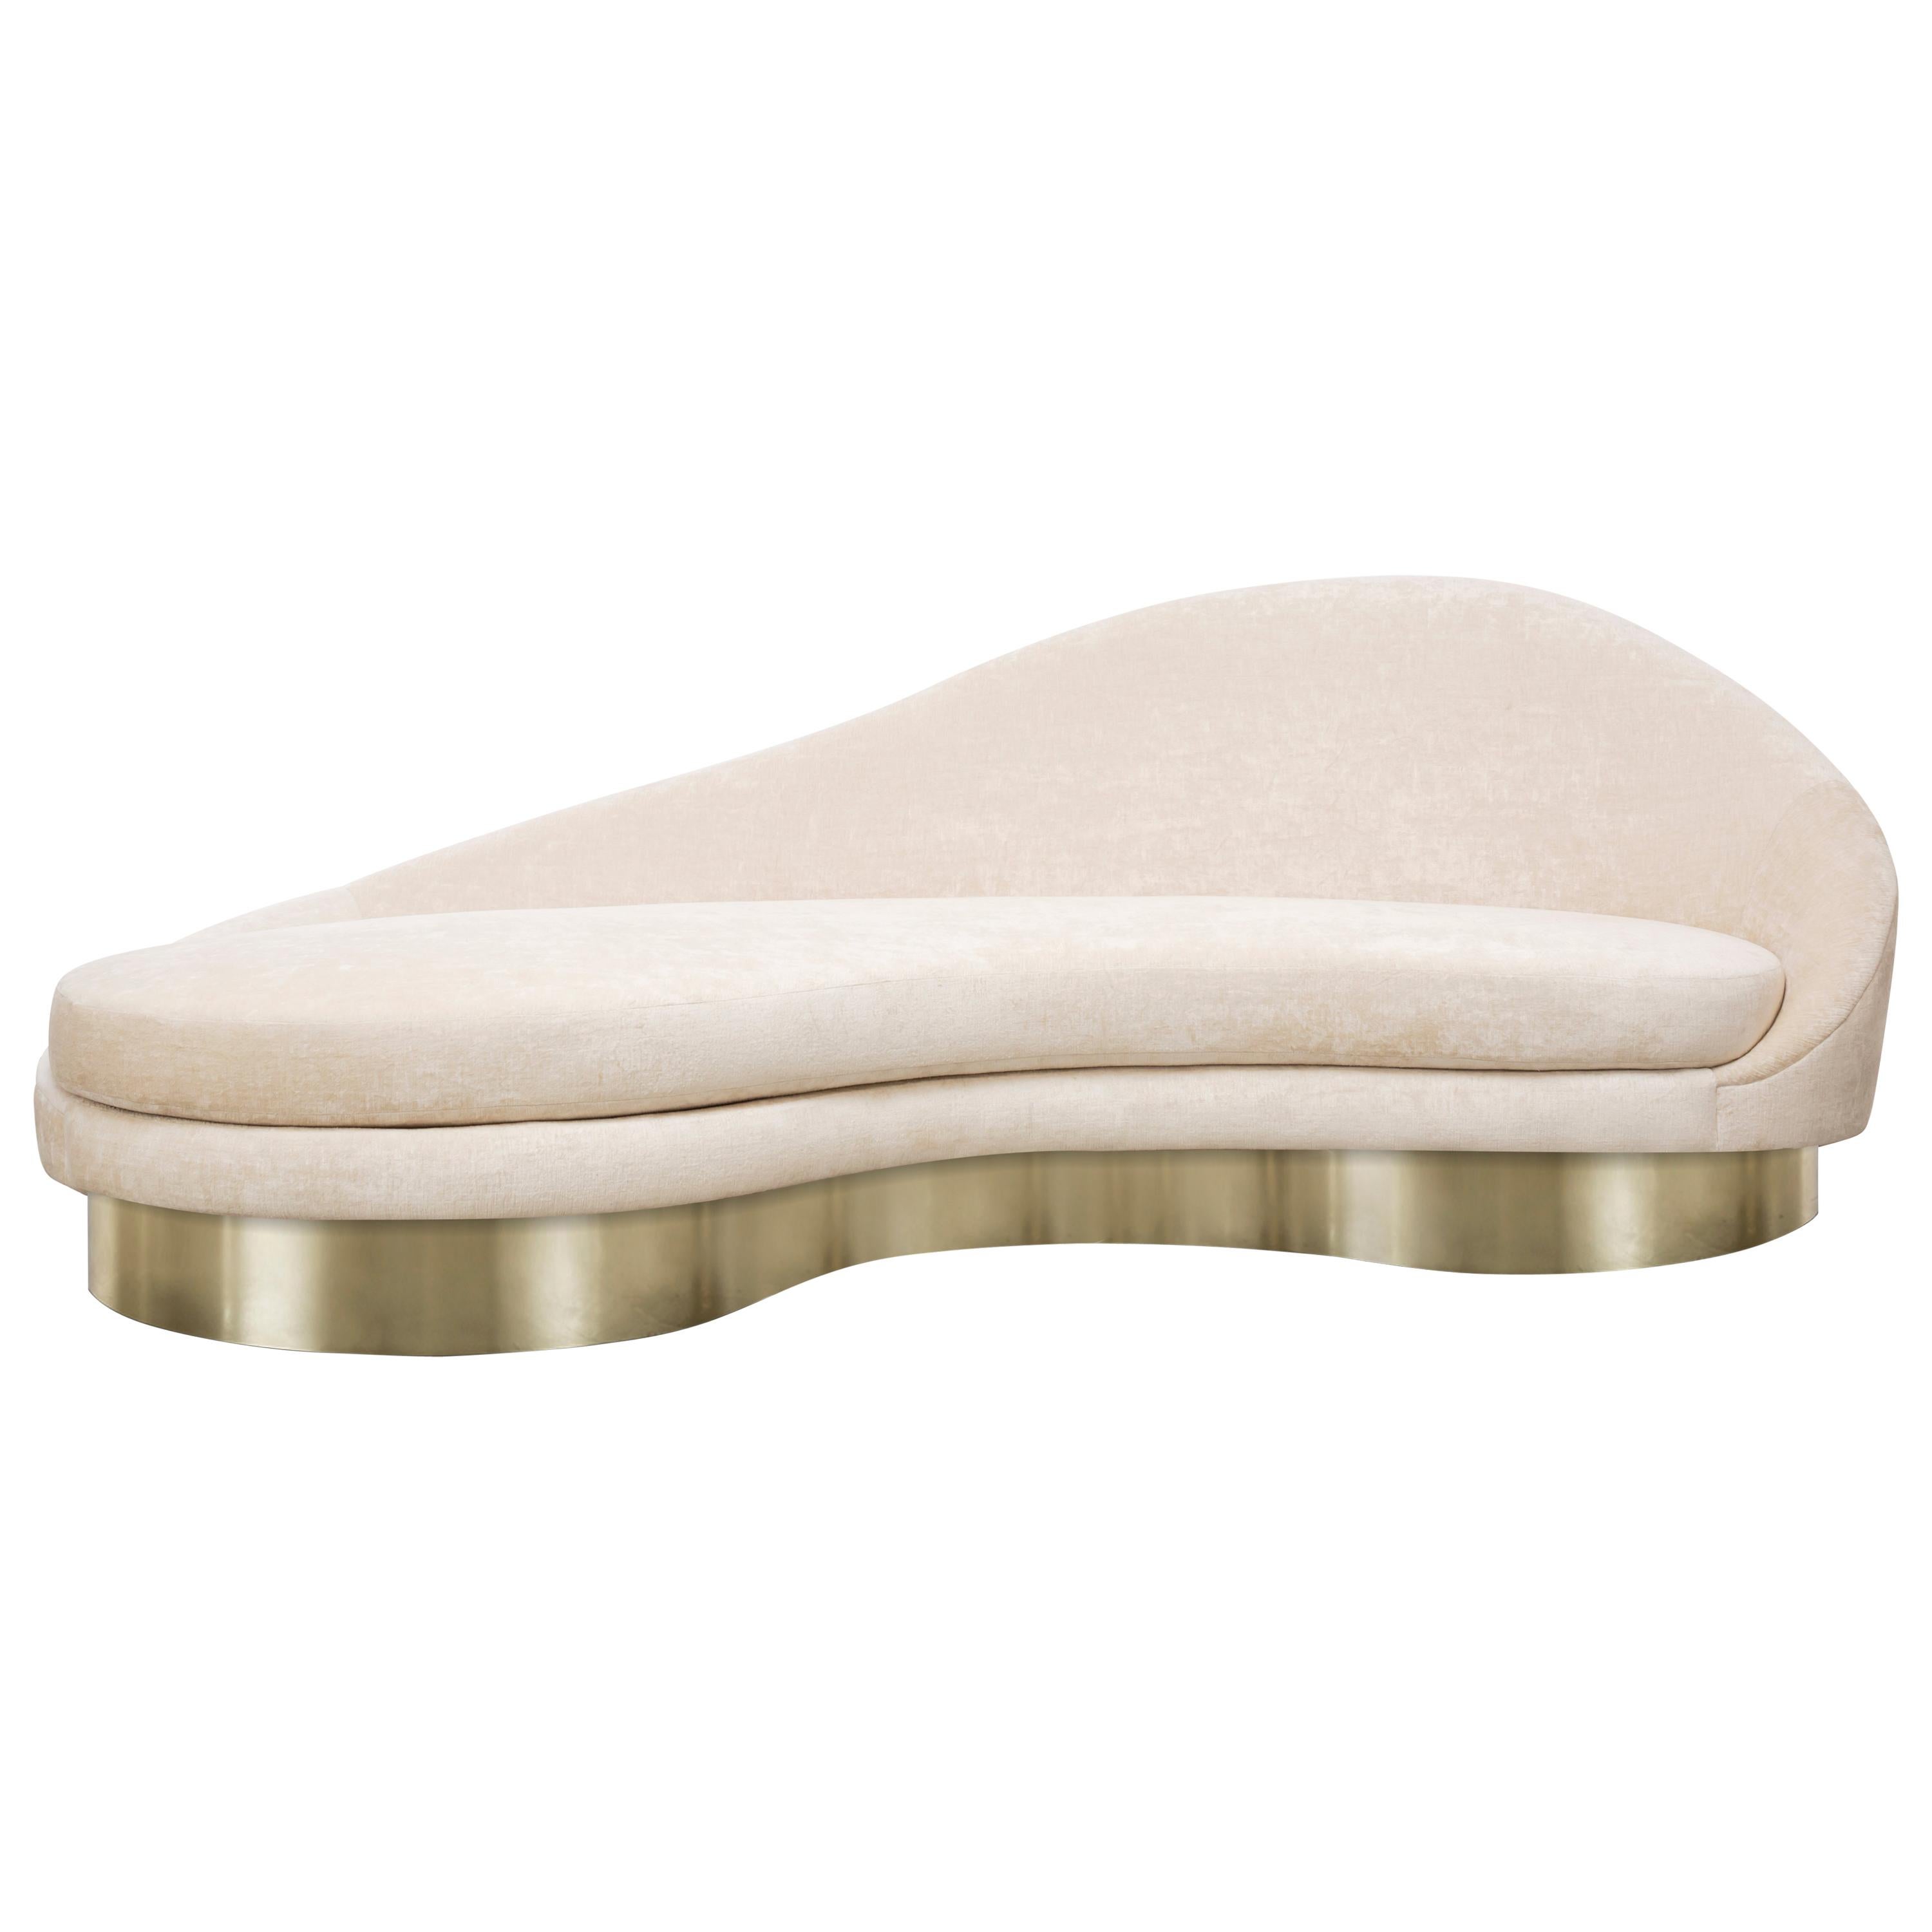 SATINE SOFA - Modern Asymmetrical Sofa in Linen Velvet and a Metal Plinth Base